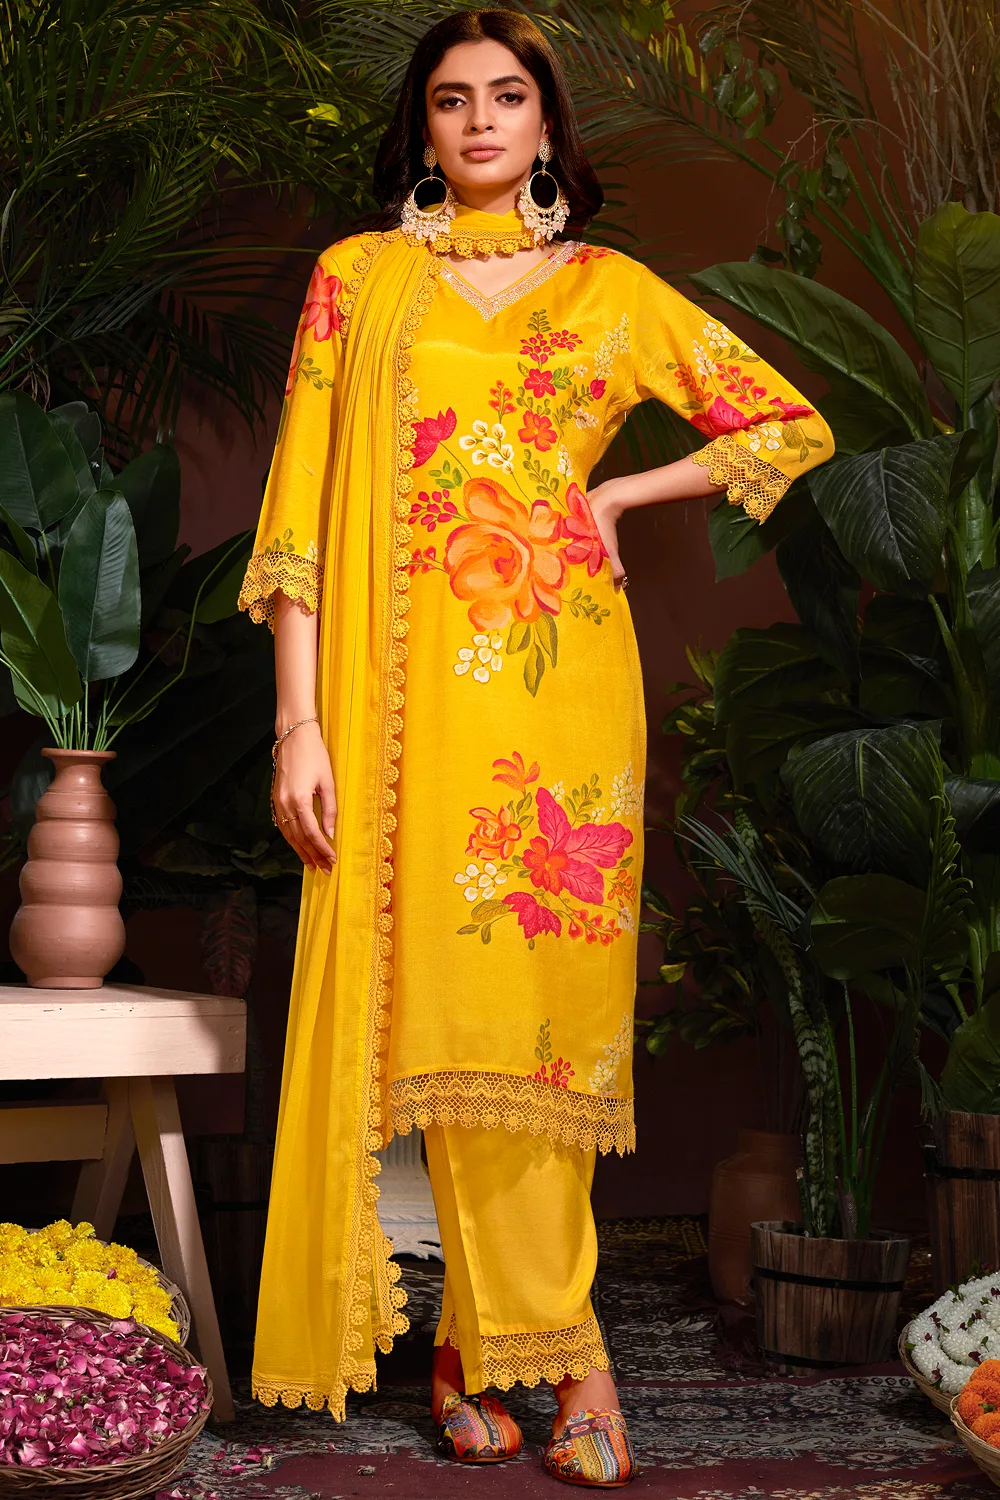 Sunshine Radiance: Yellow Floral Muslin Salwar Suit for Mehendi/Haldi